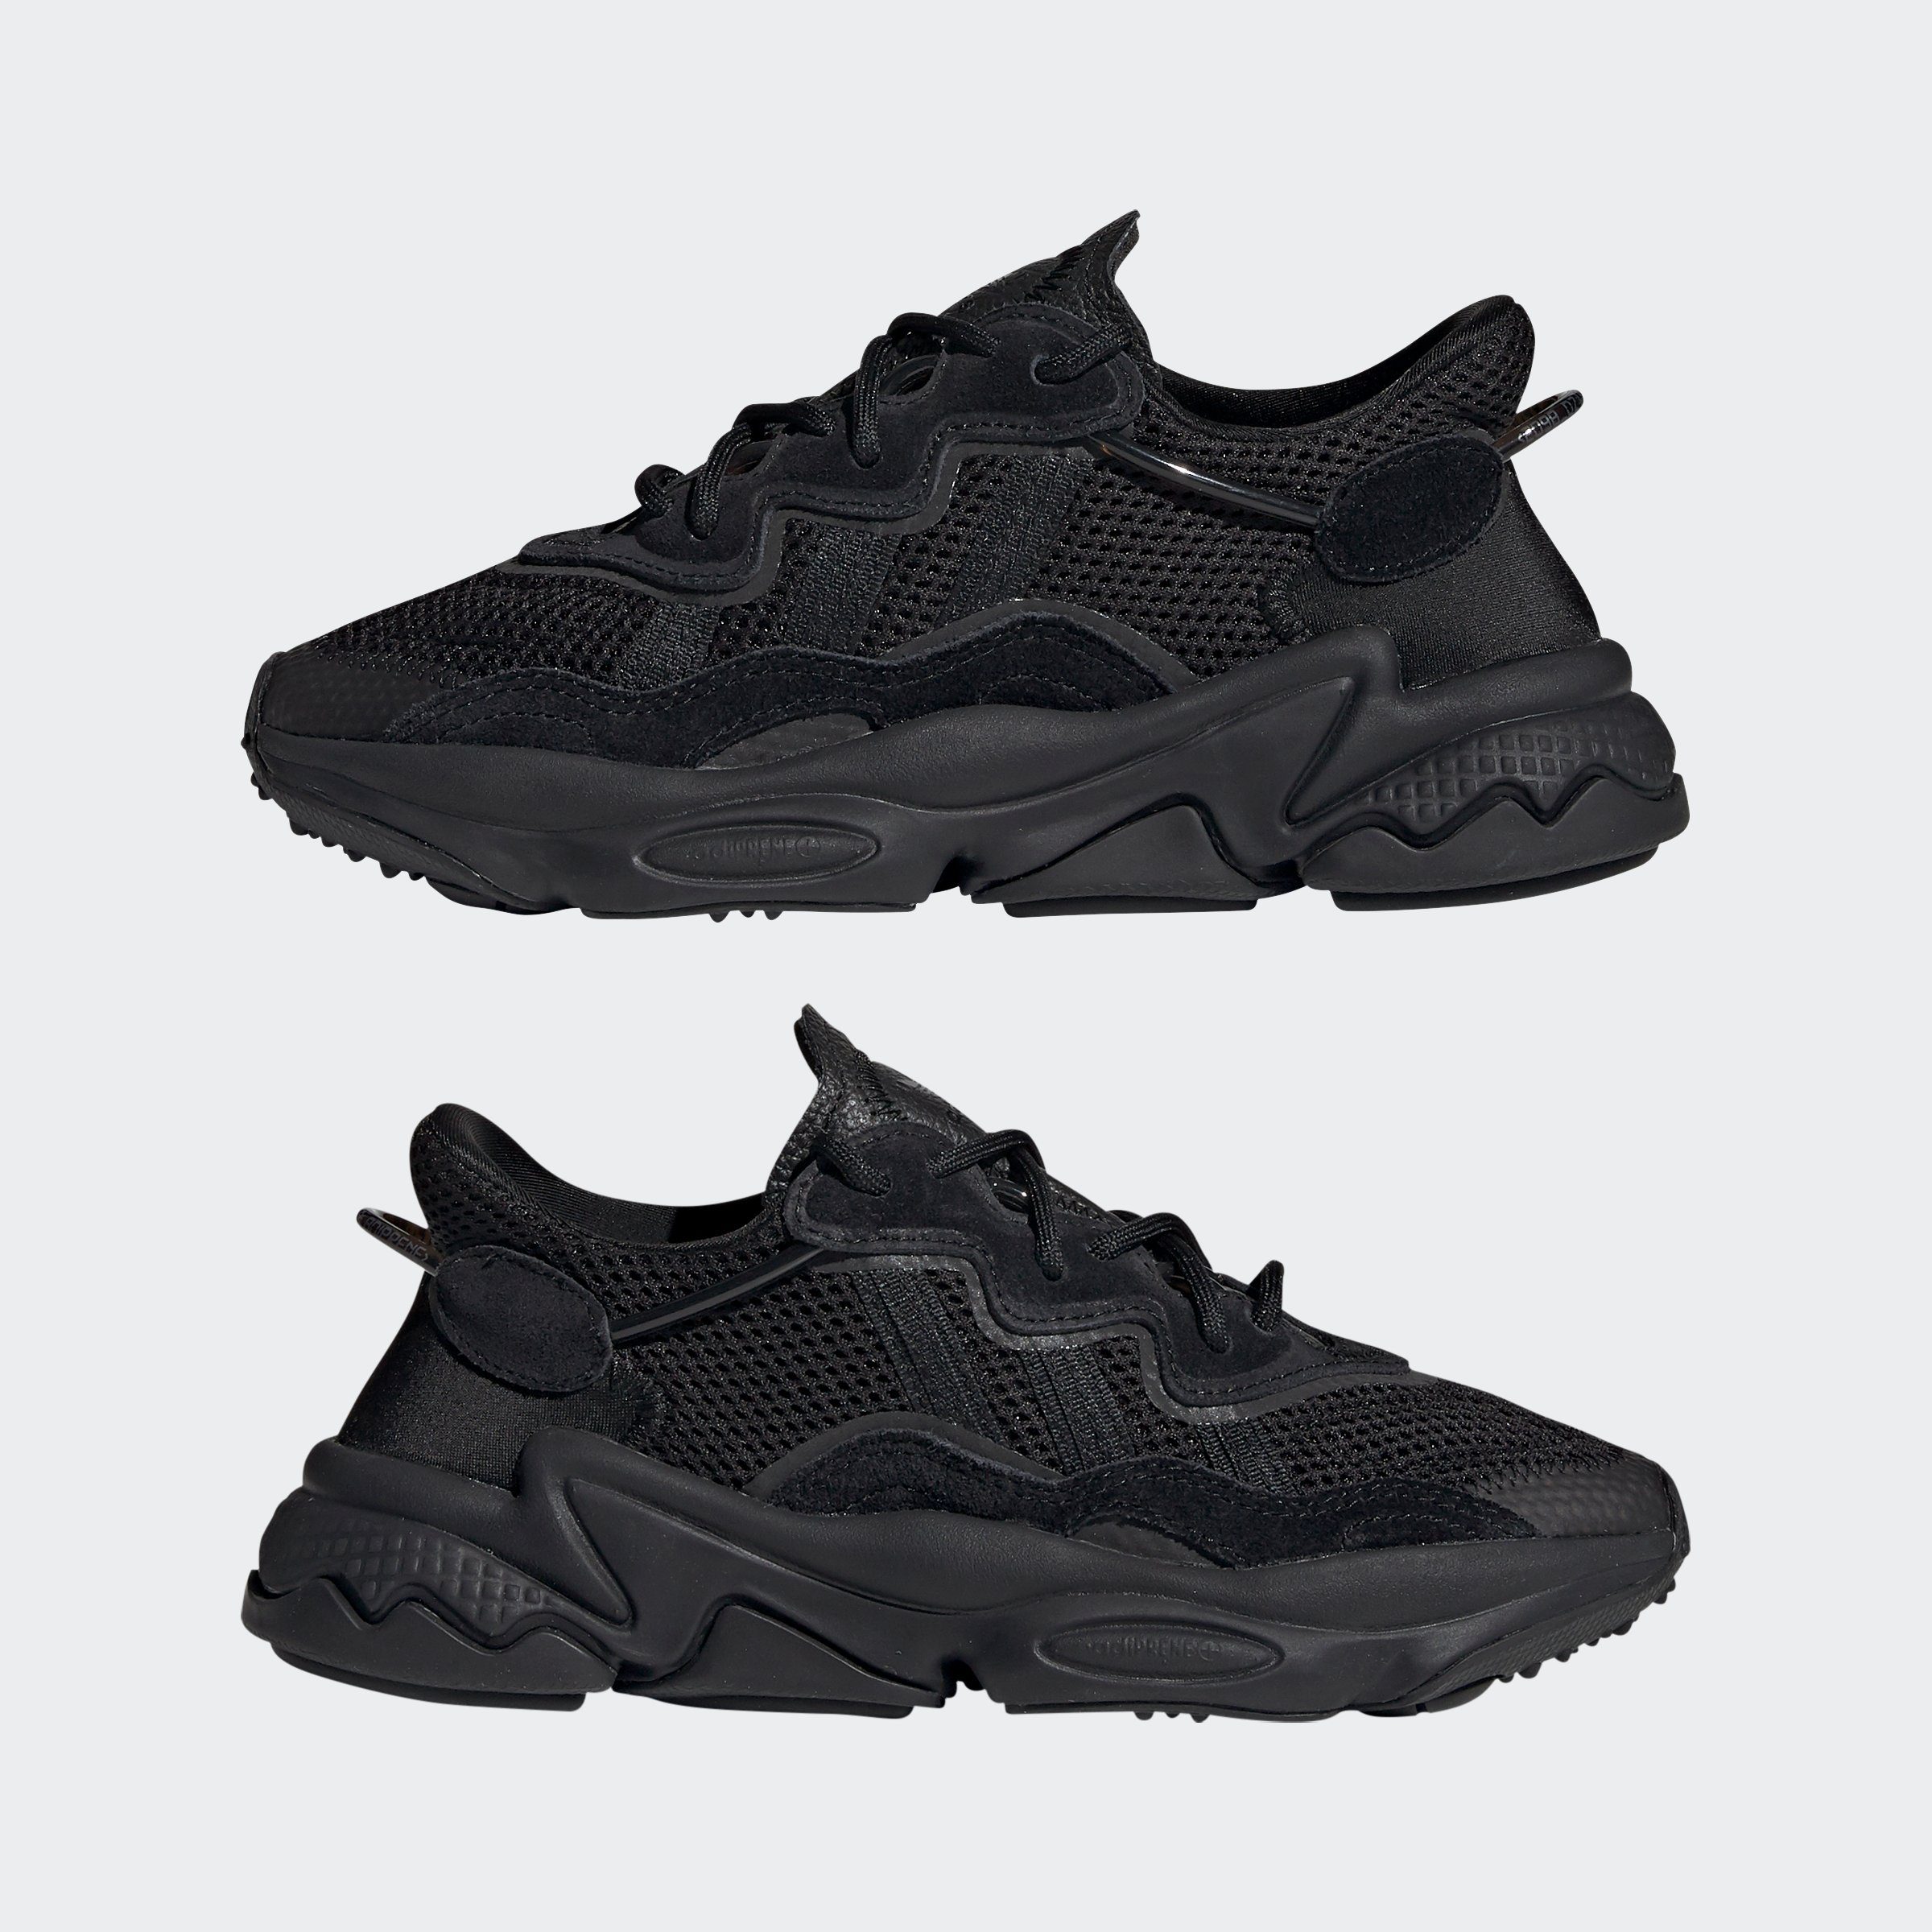 Originals / Trace / Metallic Core Sneaker Black Core OZWEEGO Grey Black adidas